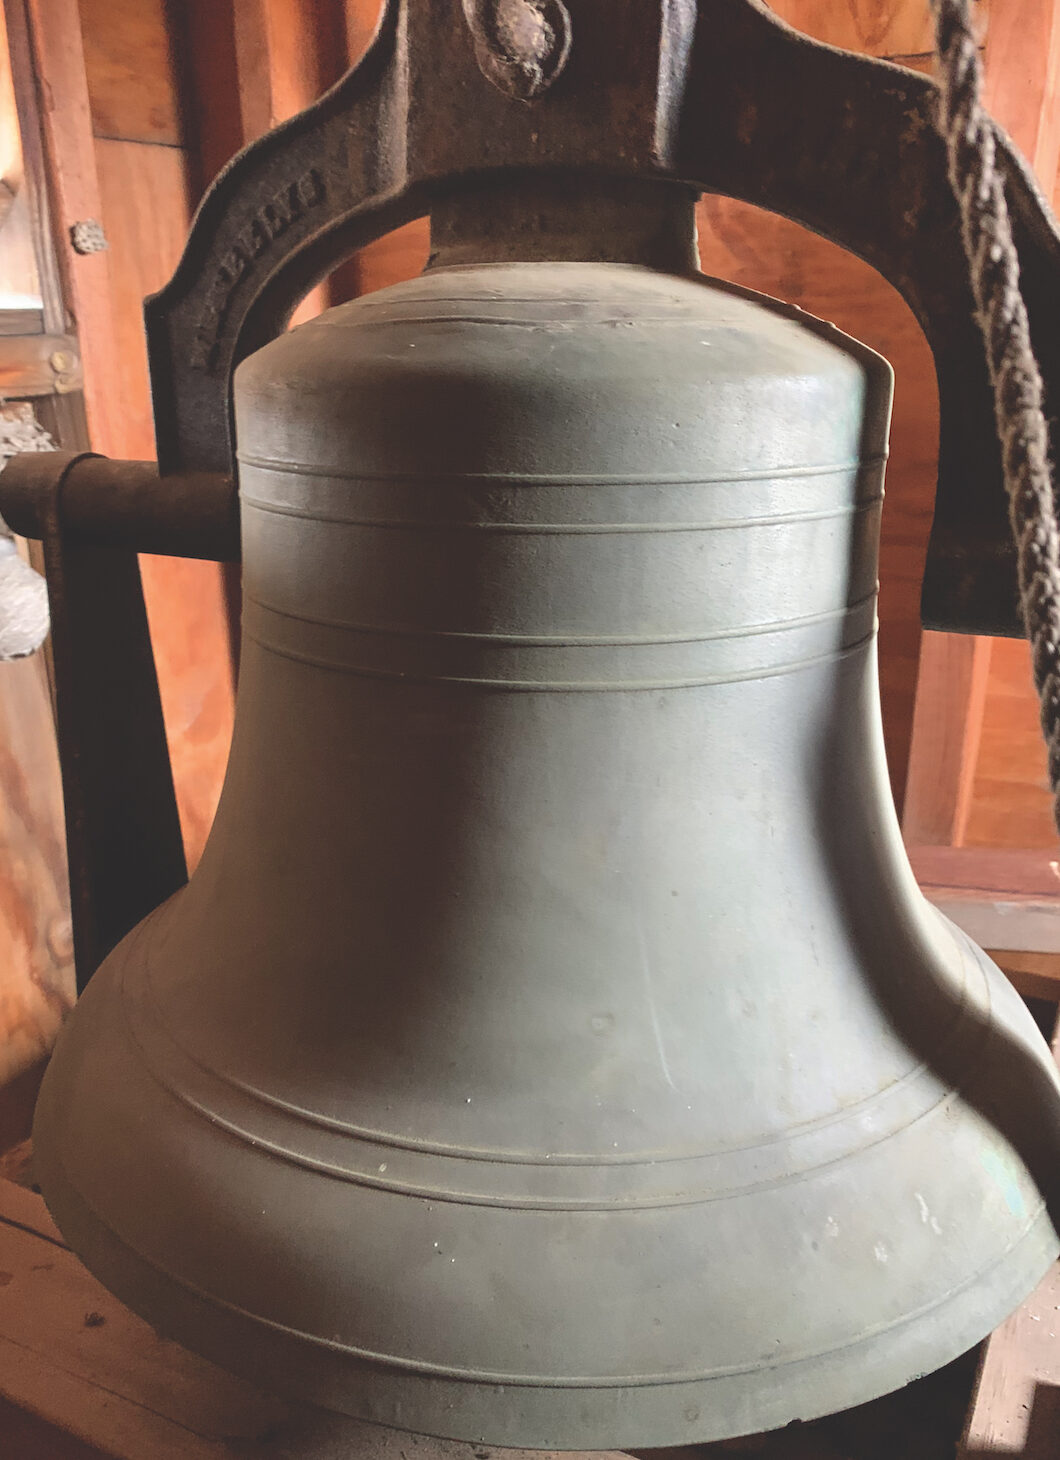 Historic bell discovered at Neshobe school